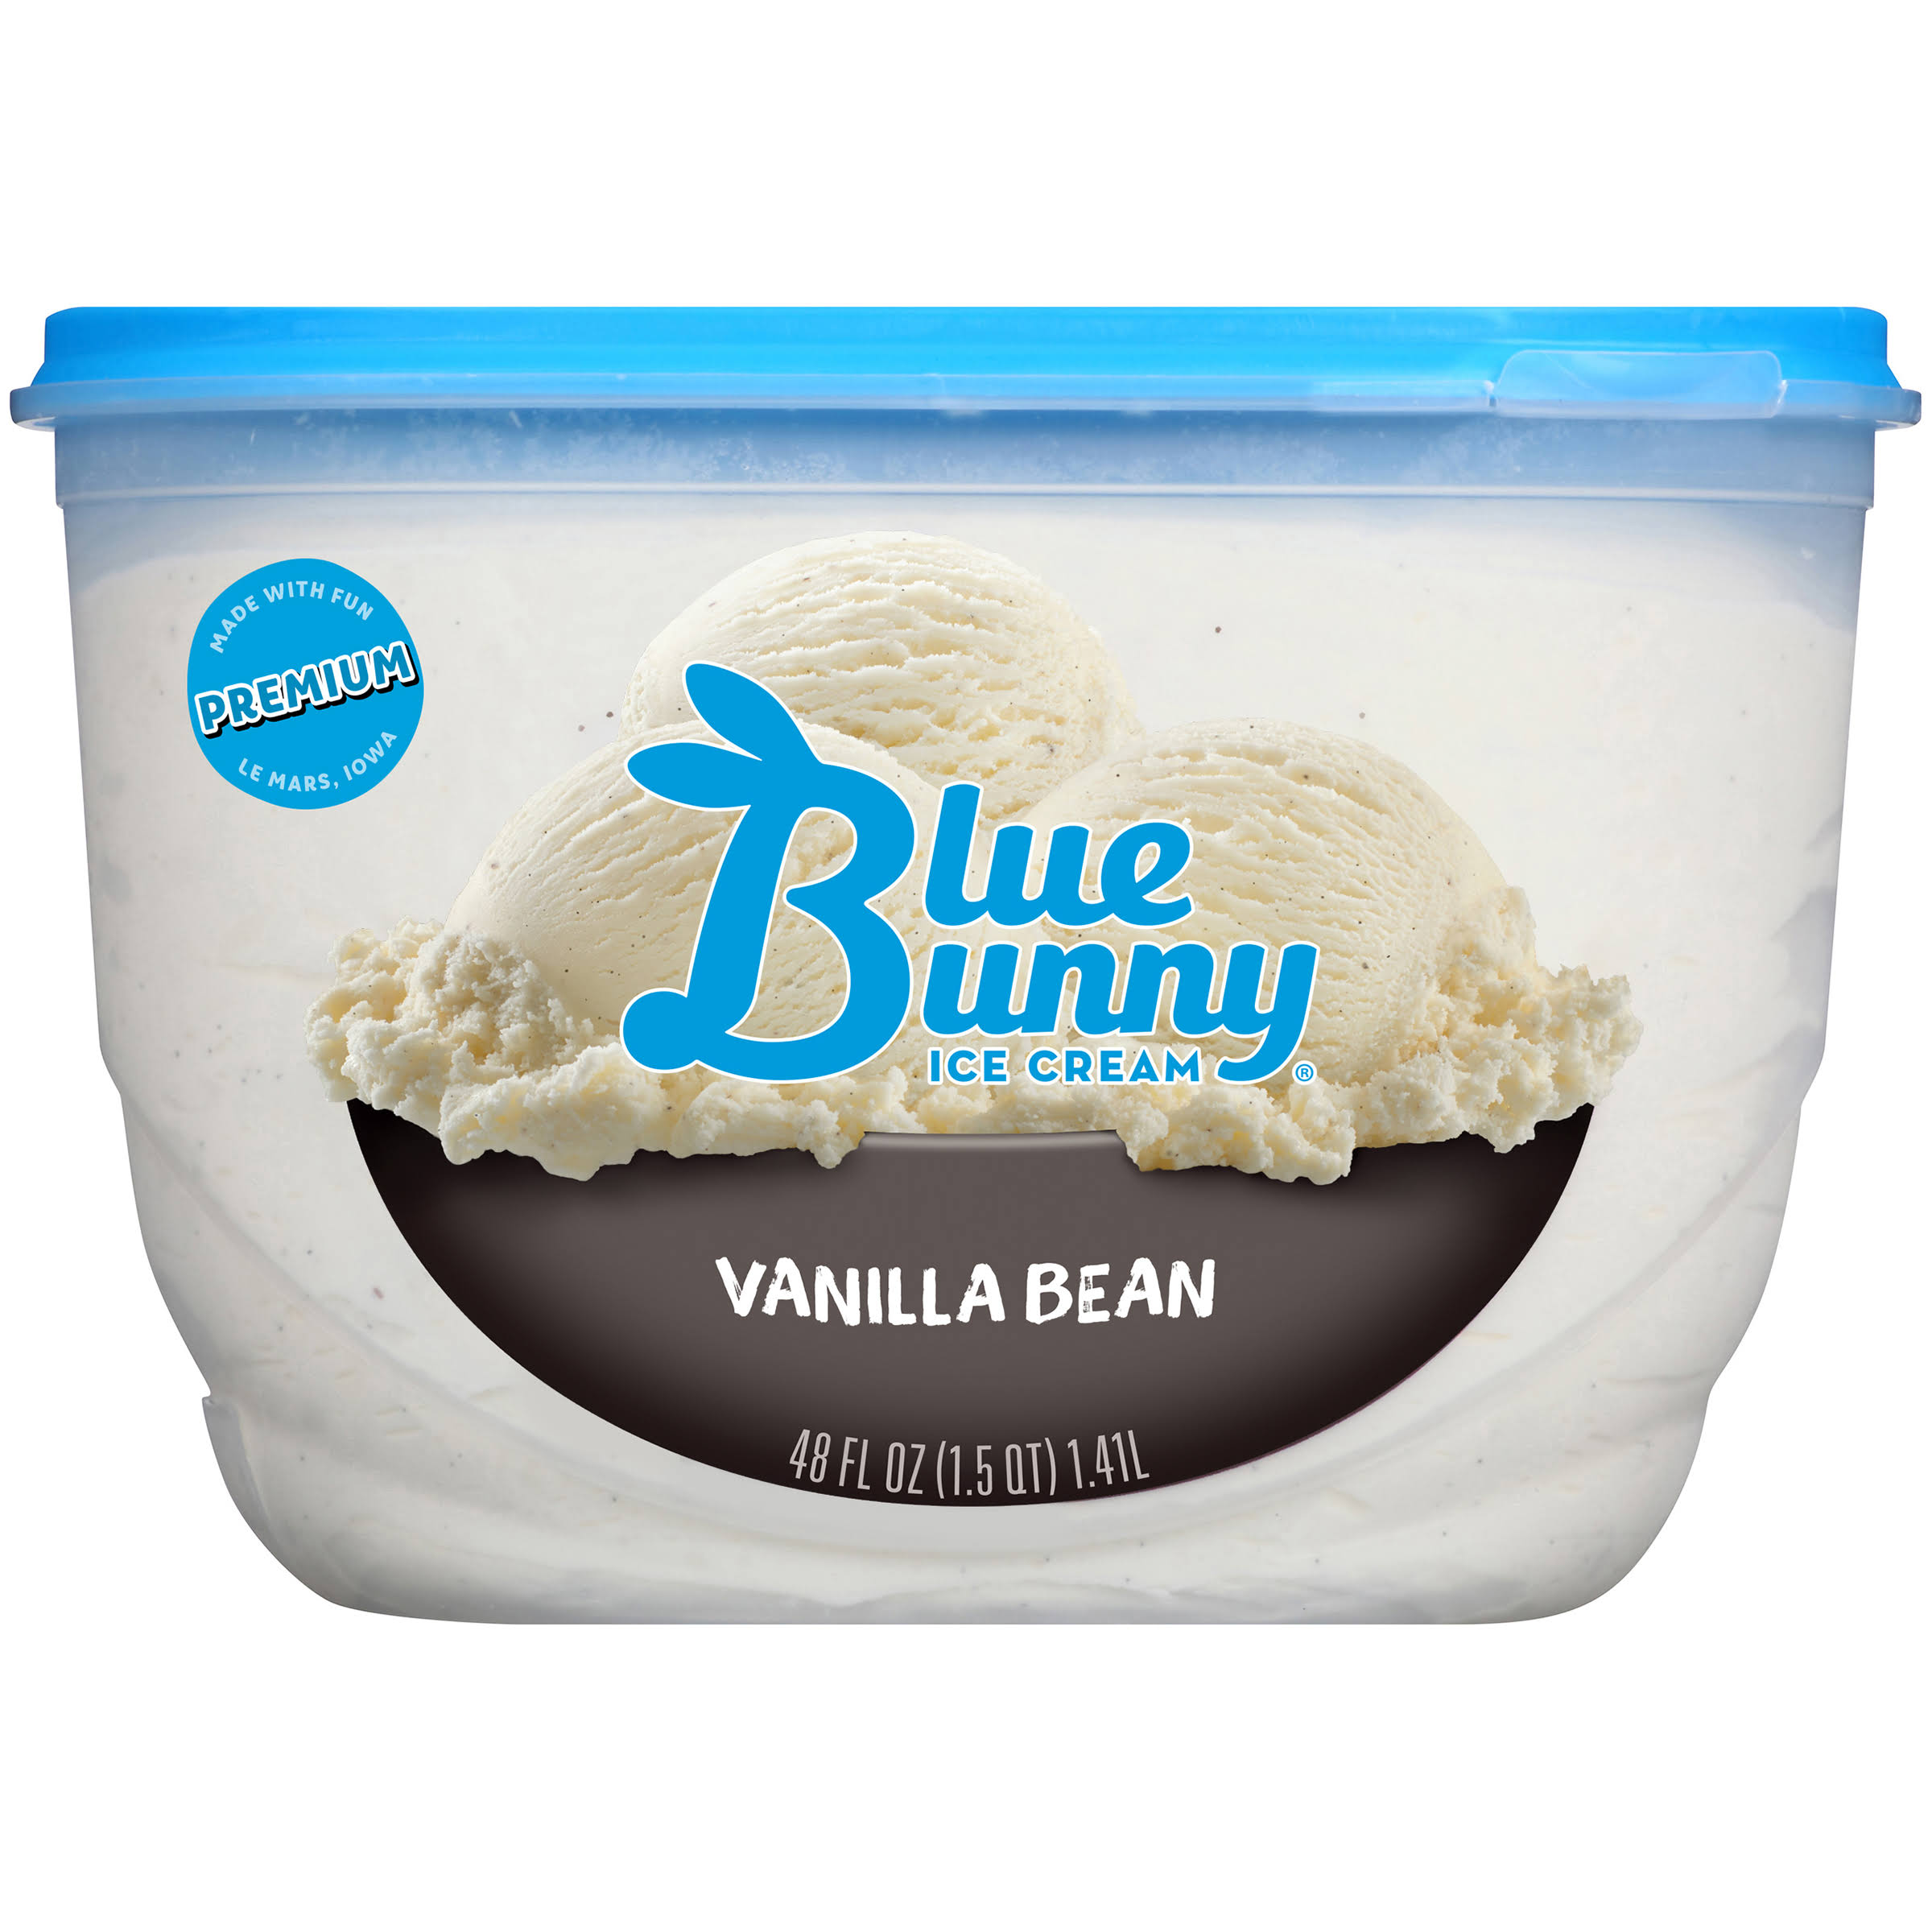 Blue Bunny Ice Cream, Vanilla Bean Flavored - 48 fl oz